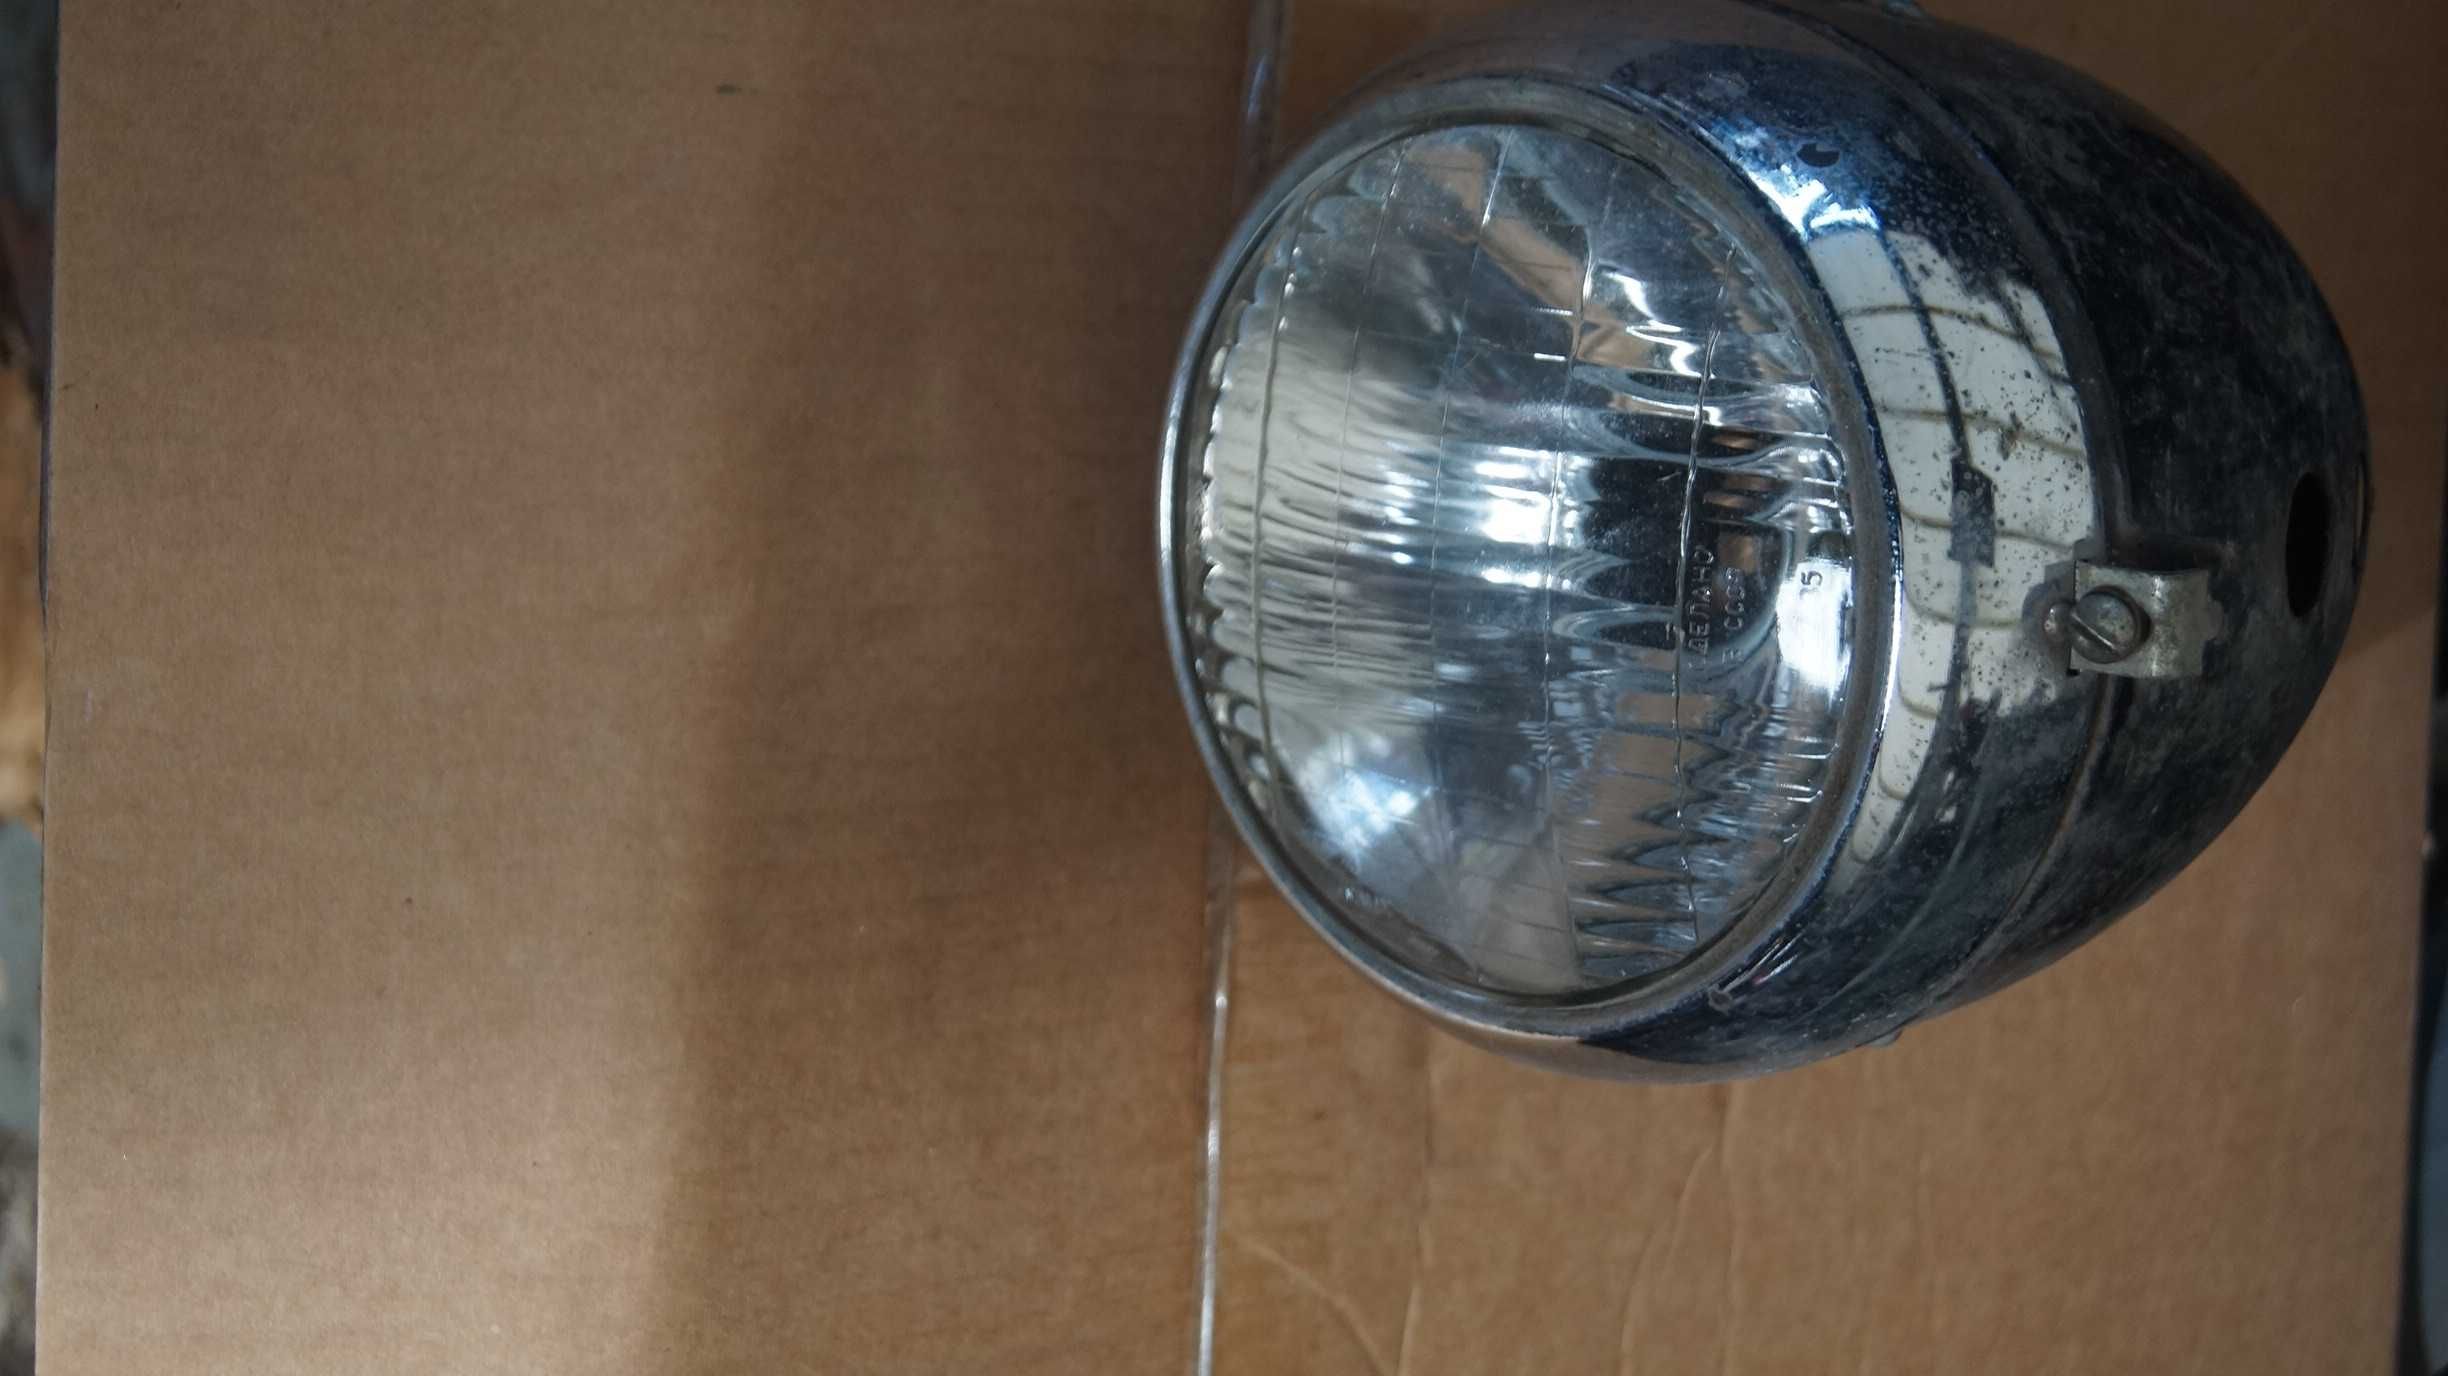 IŻ DKW lampa przednia kompletna oryginał super